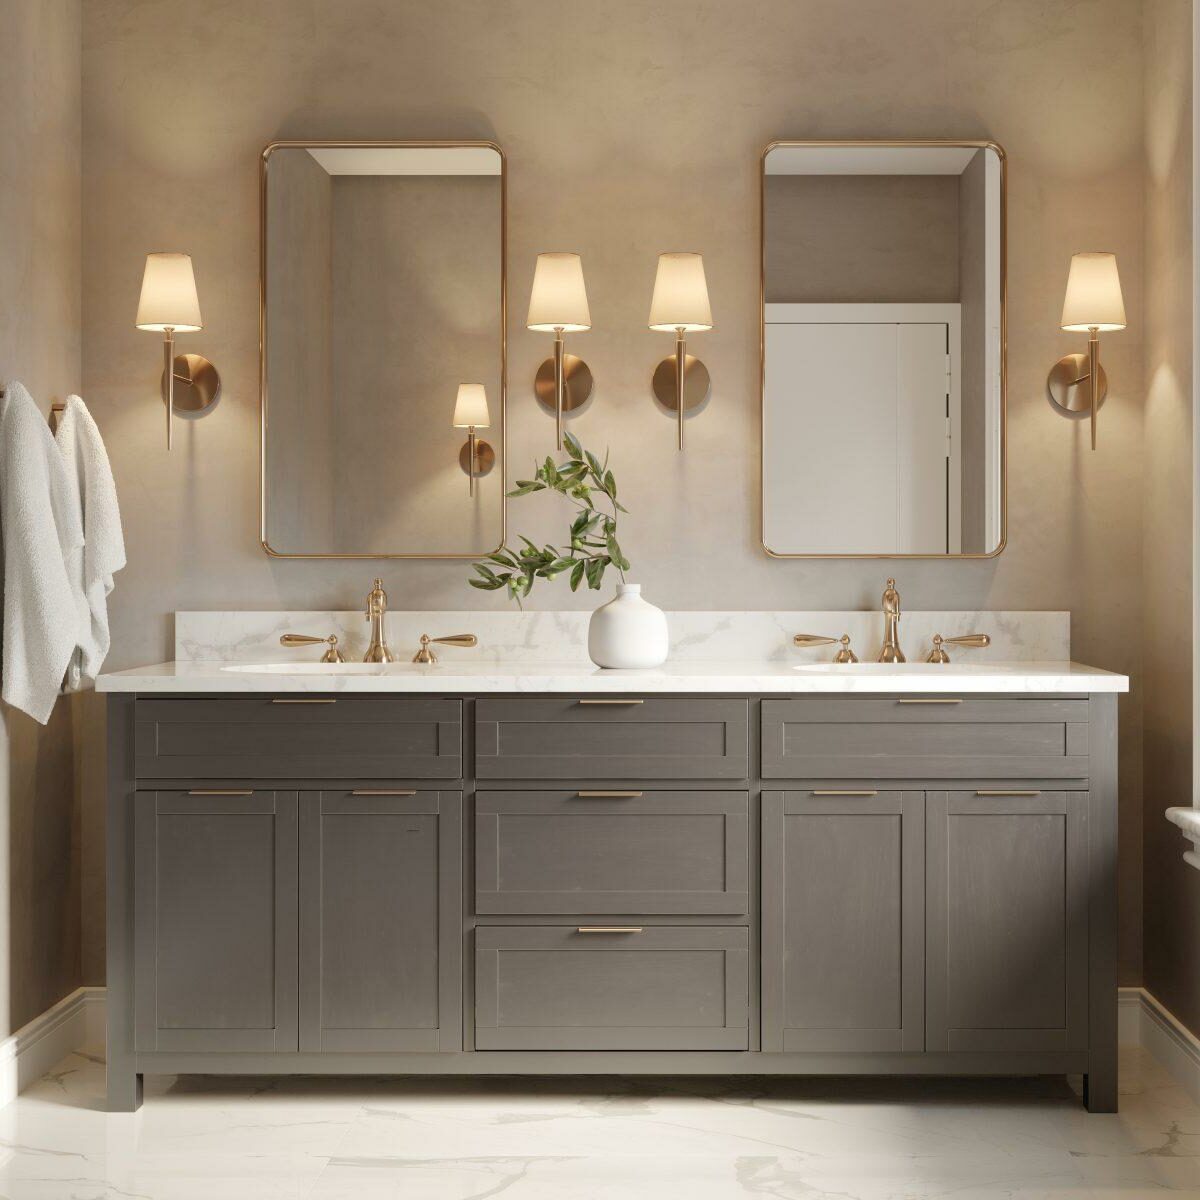 Bathroom Grey Vanity Dual Sinks Square, Paneling Factory Of Virginia DBA Cabinet Factory